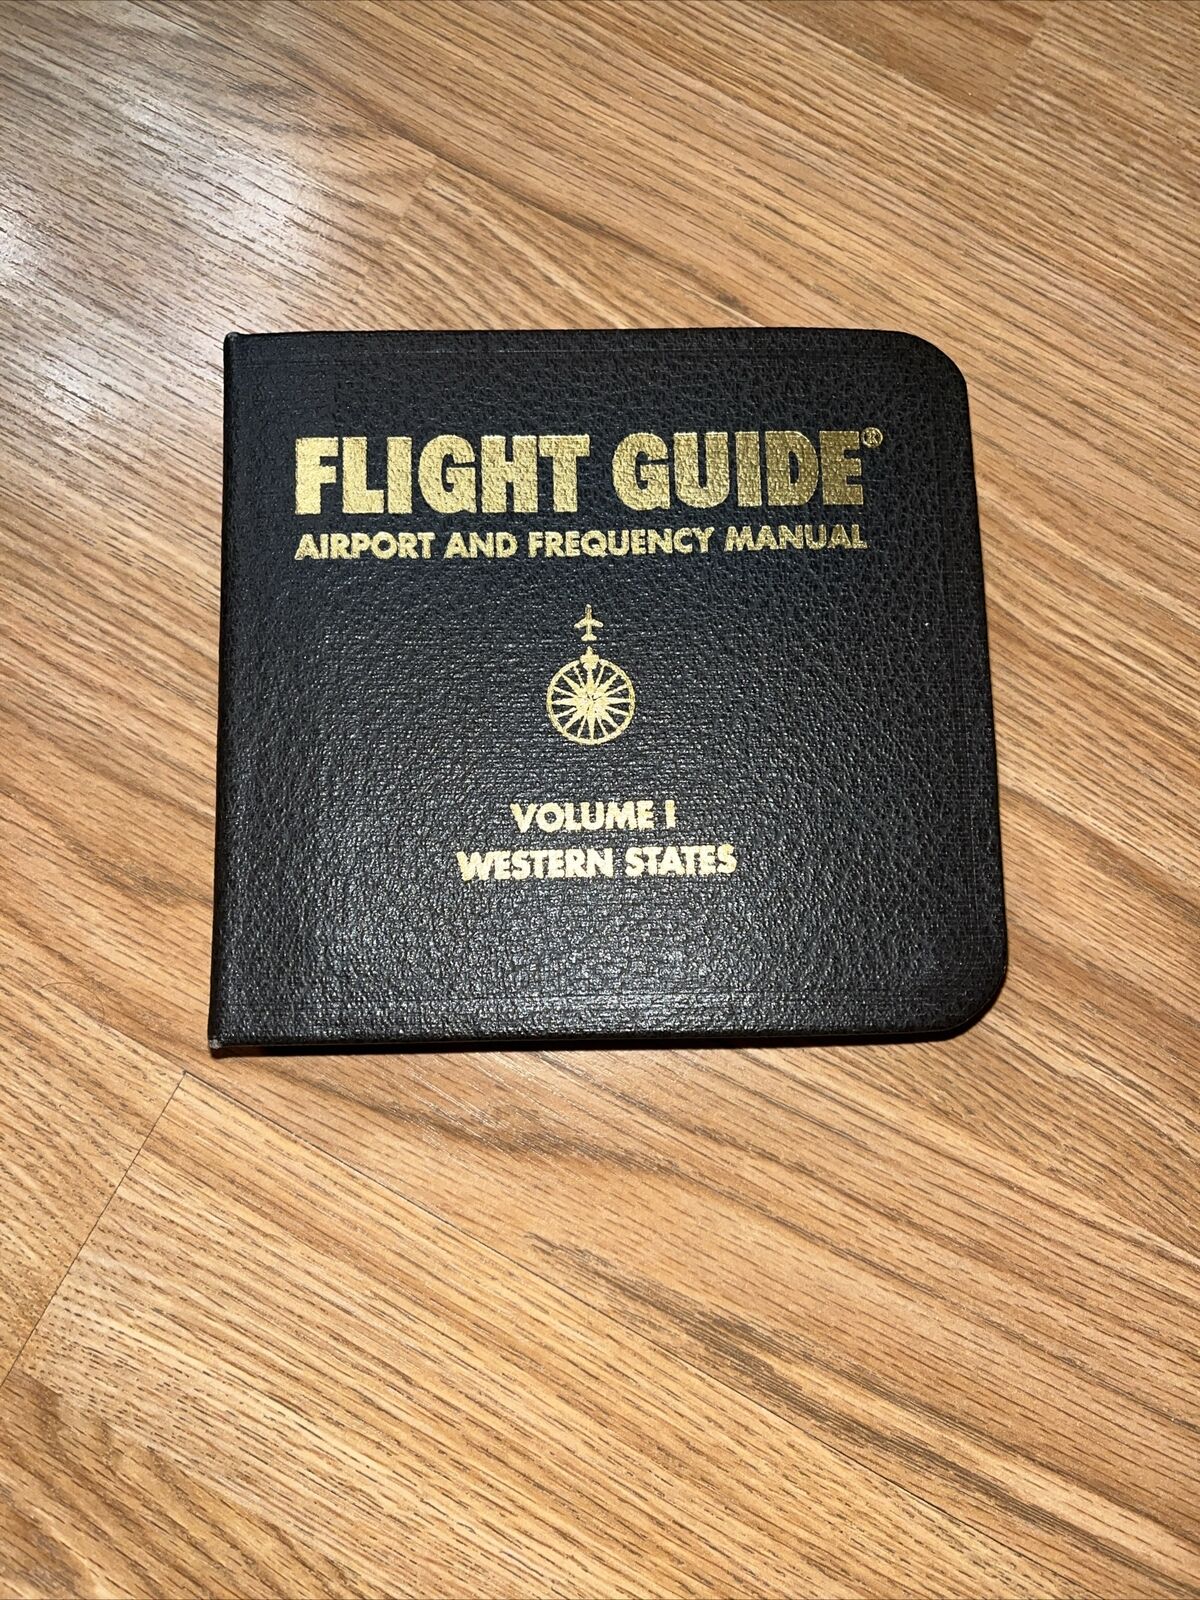 Flight Guide Volume 1 Western states 1997